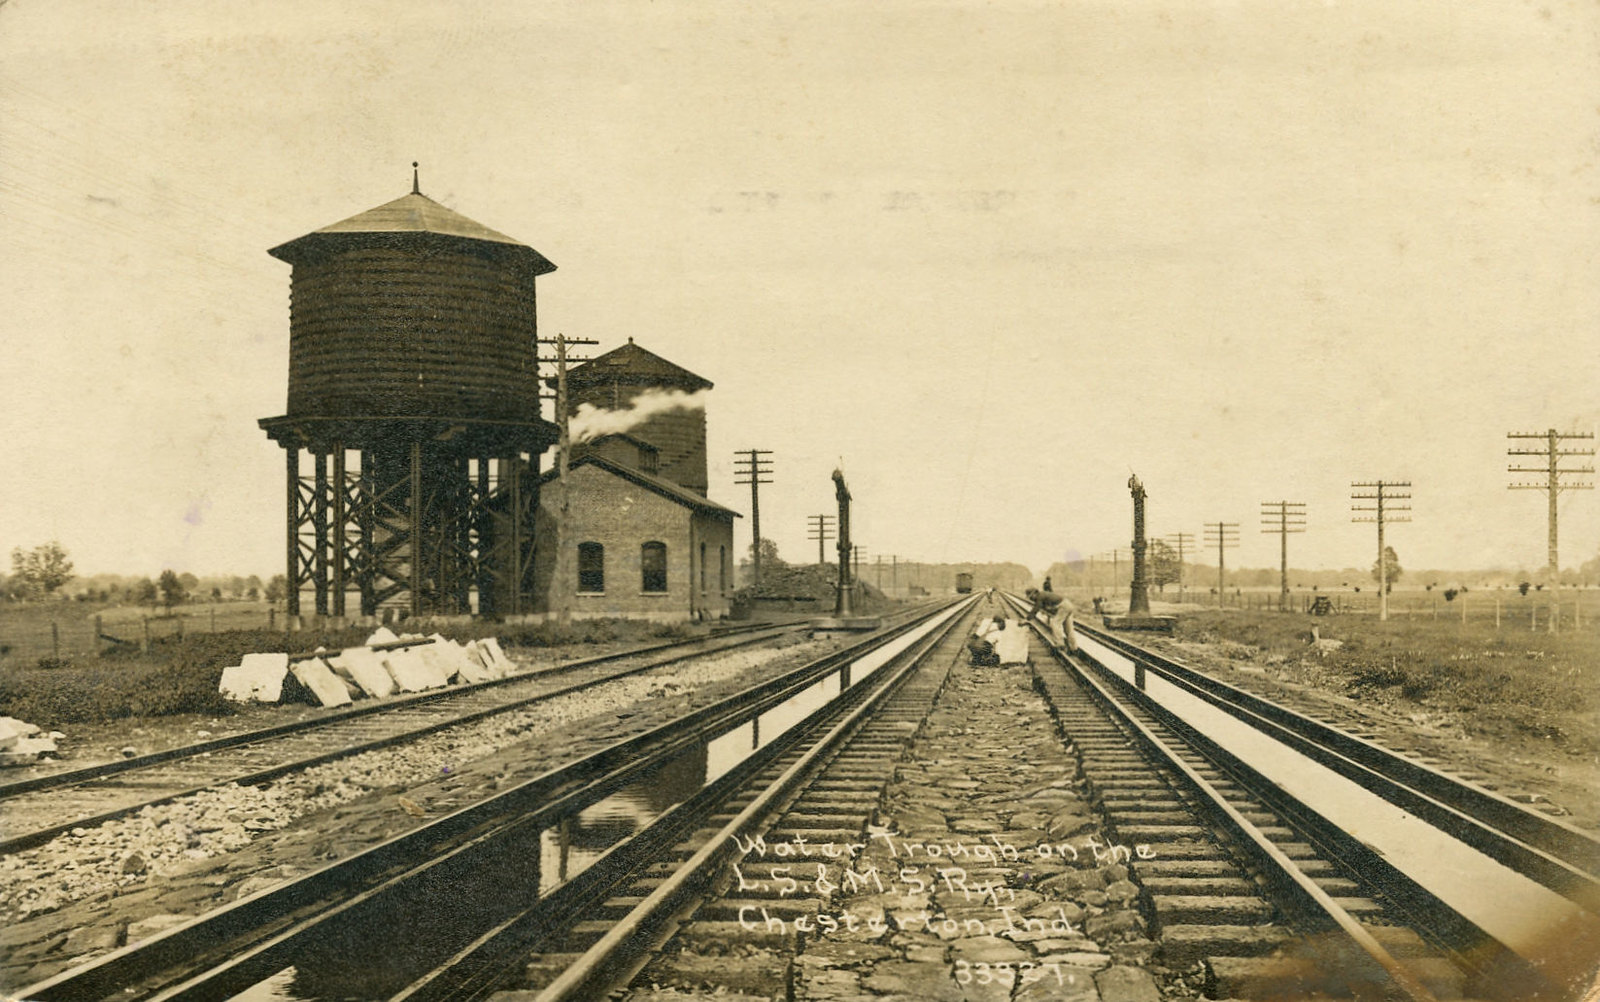 Lake Shore and Michigan Southern Railway, 1915 - Chesterton, Indiana